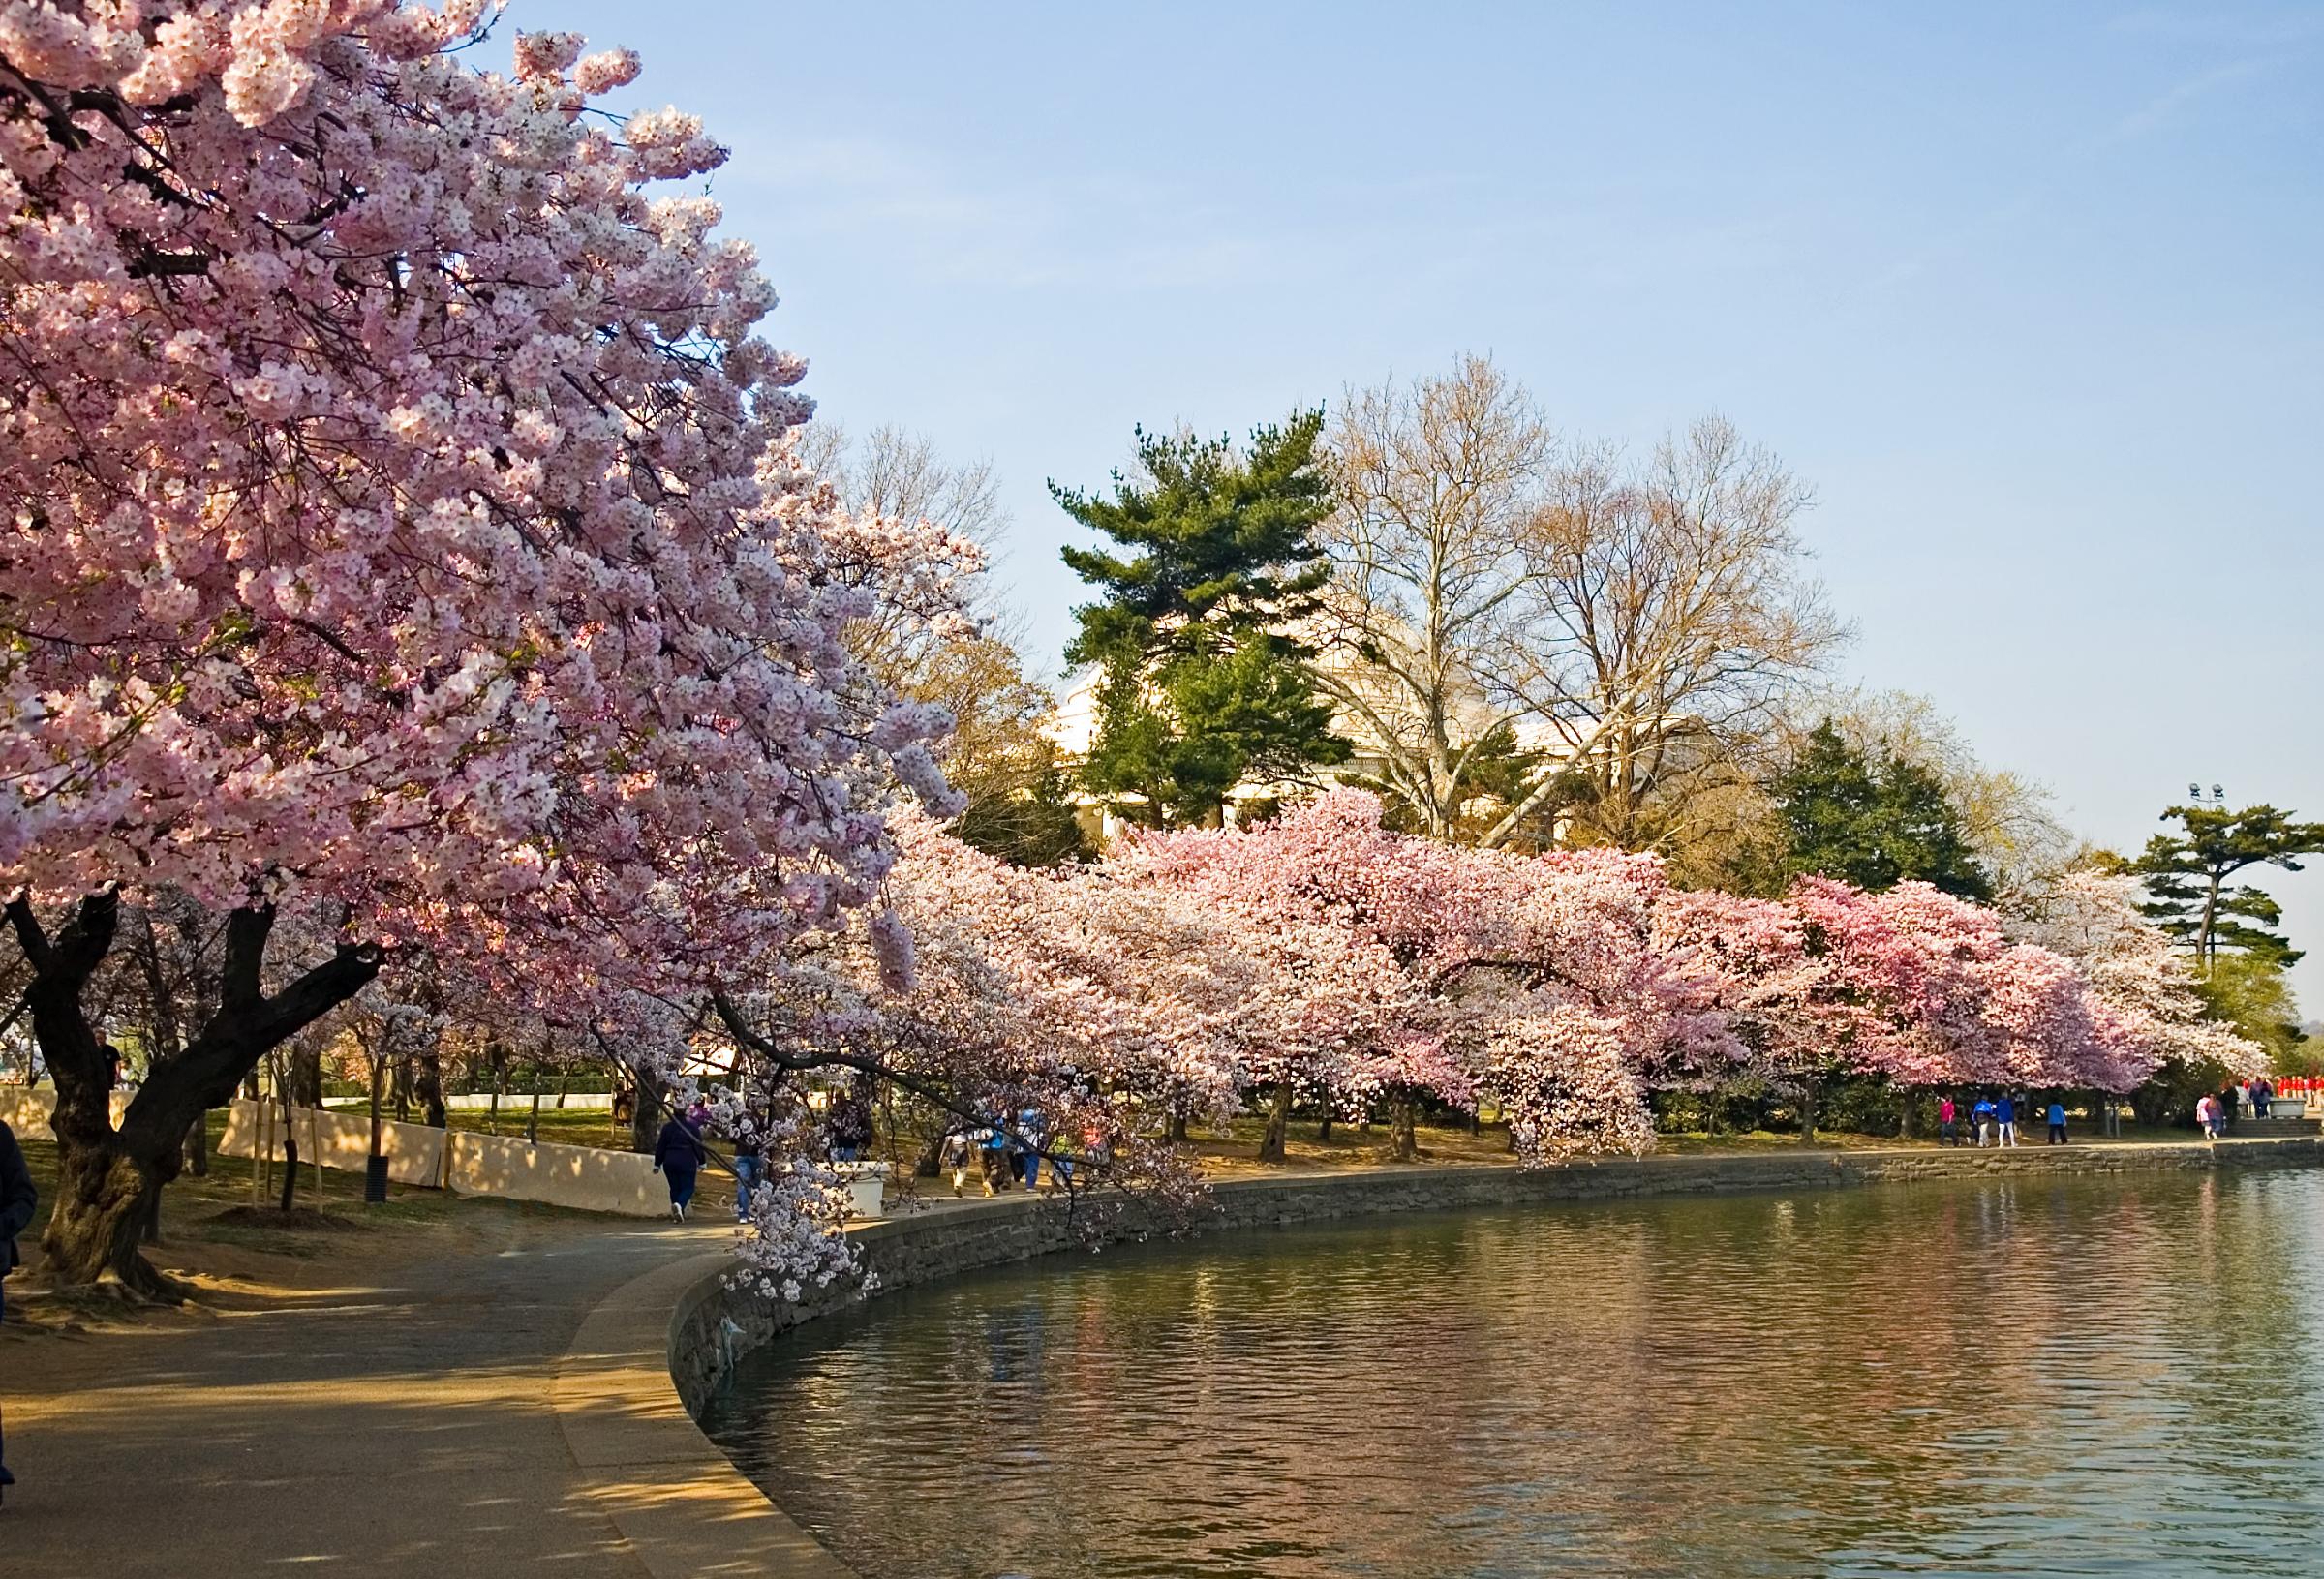 cherry blossoms, lakes - desktop wallpaper